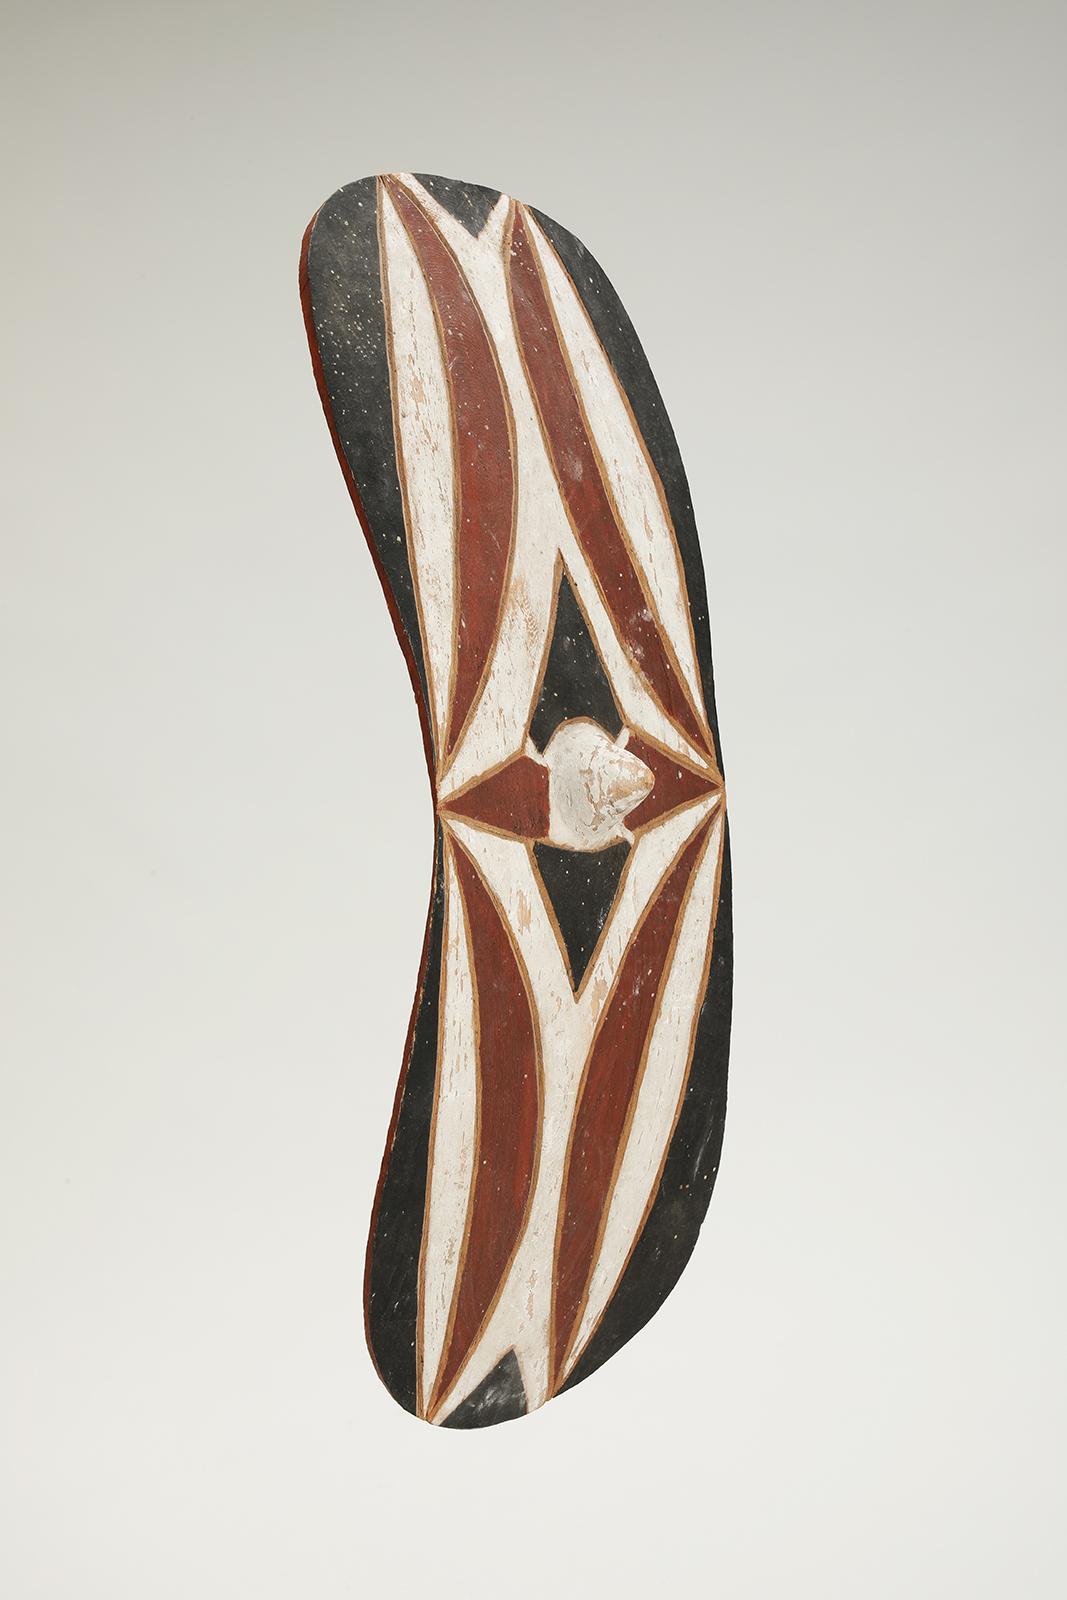 Tutsi Ceremonial dance shield.
Rwanda-Burundi
Second quarter, 20th century.
Wood, natural pigment
Measures: 20” long x 7 1/4” wide x 4” deep (50.5 x 18 x 10 cm).
Provenance: Colonial period collection, Belgium (before 1959).